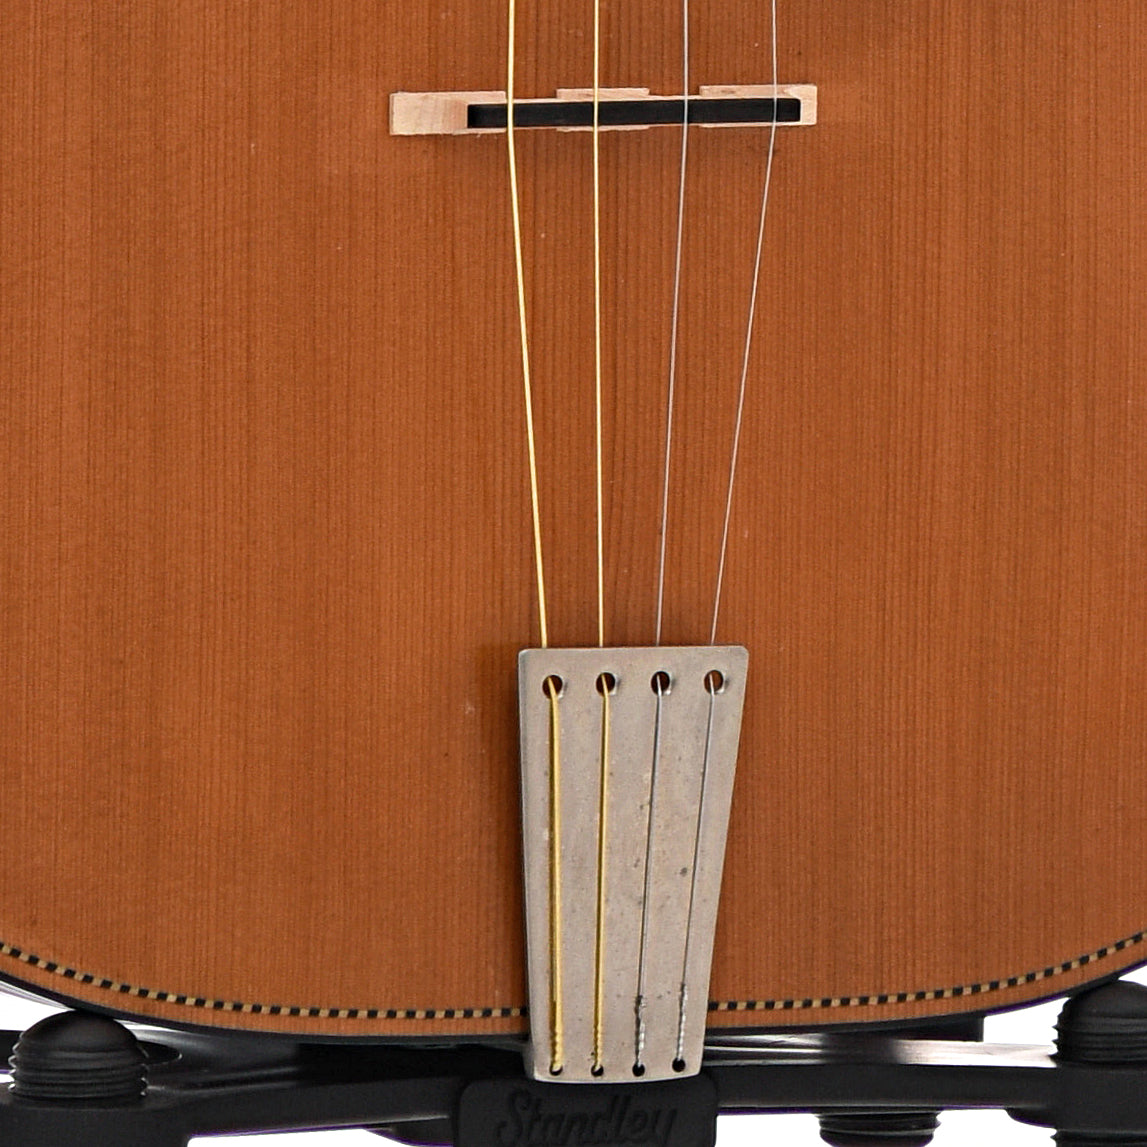 Tailpiece and bridge of Fairchild Tenor Guitar 